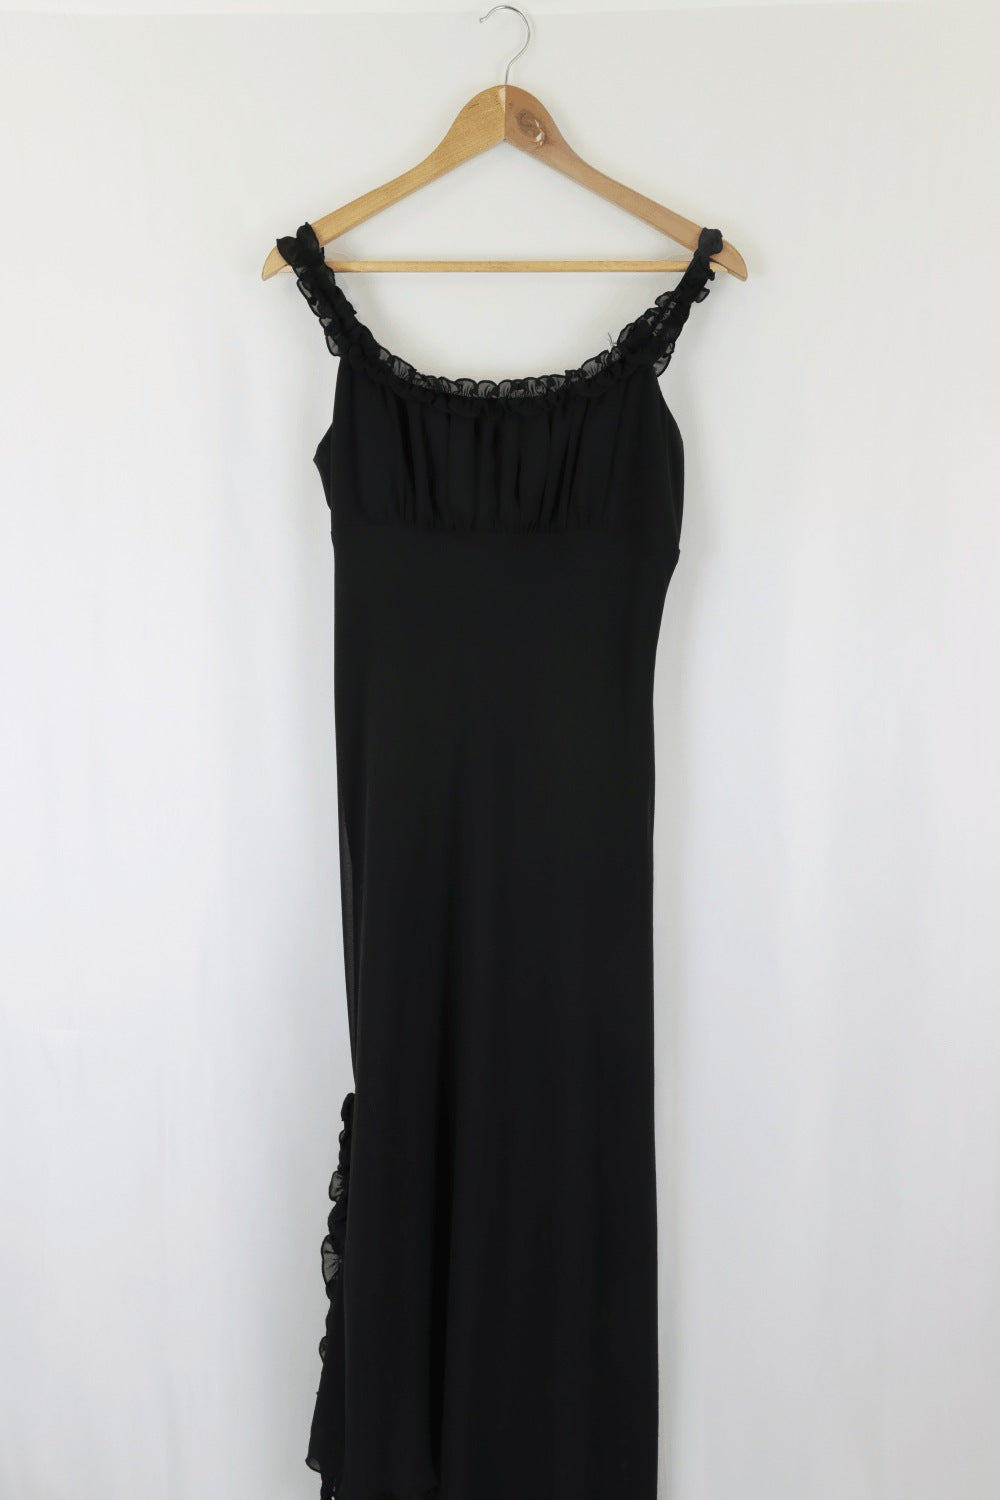 Liz Jordan Black Dress 12